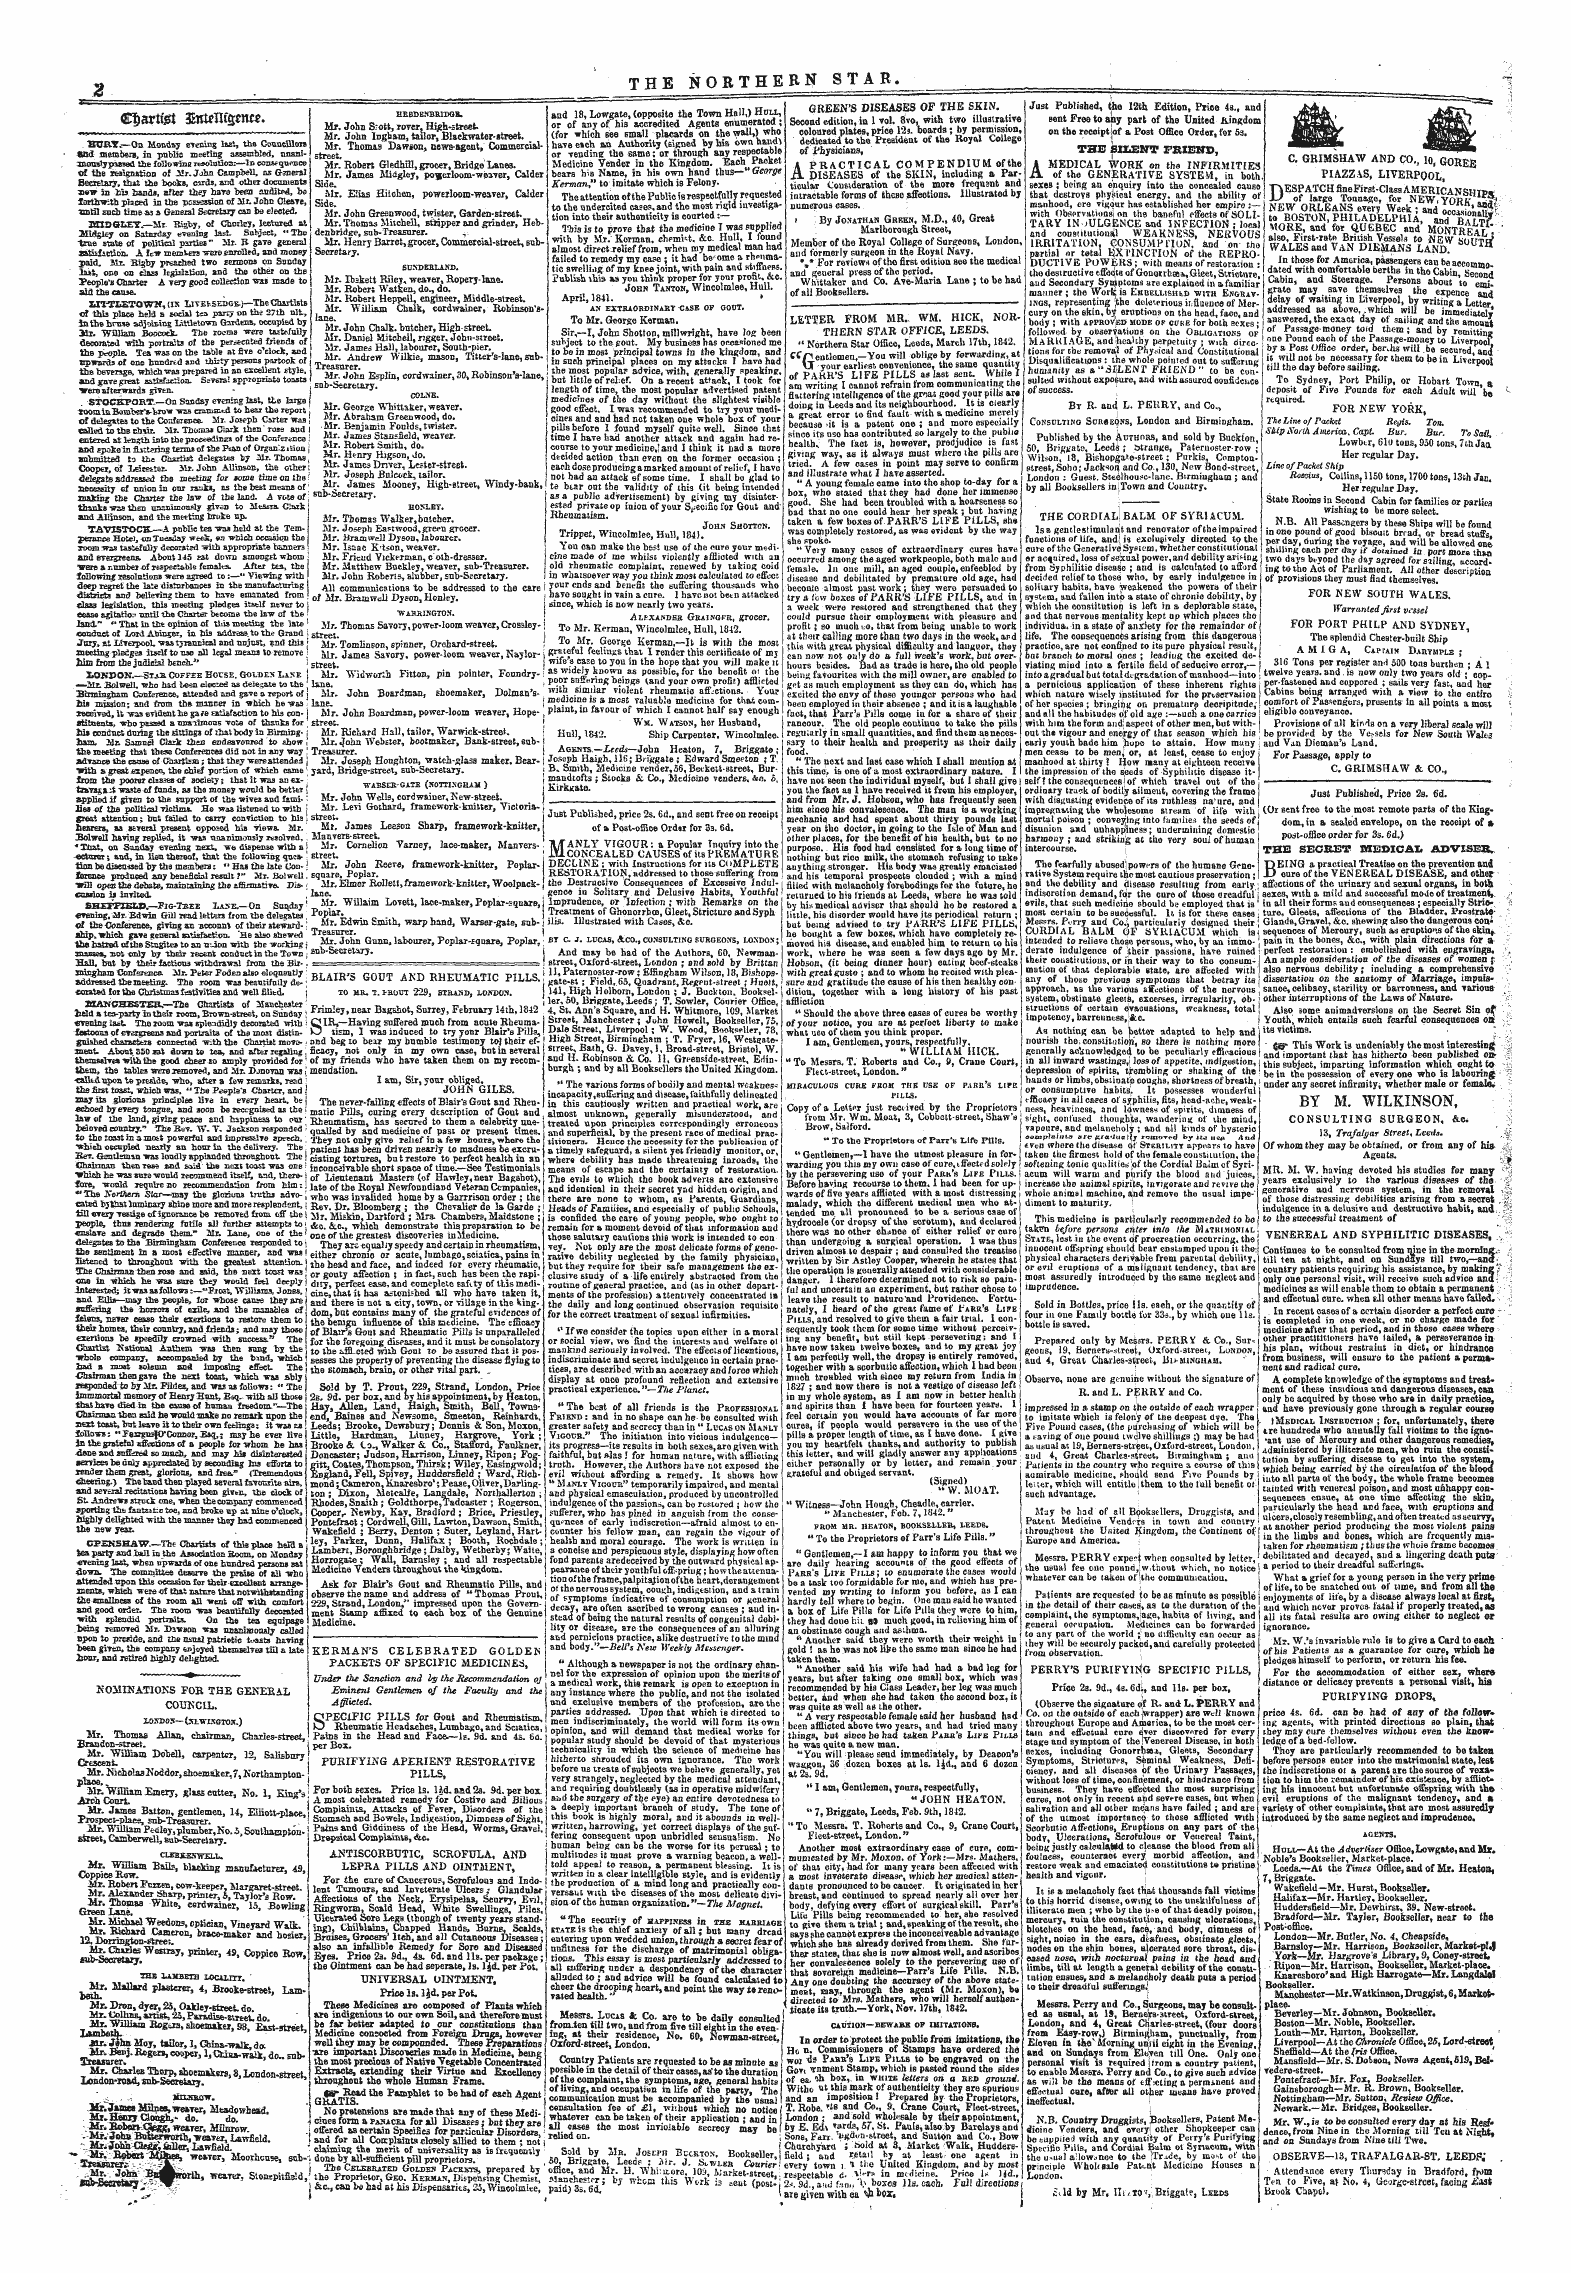 Northern Star (1837-1852): jS F Y, 1st edition - Blair's Gout Akd Rheumatic Pills.